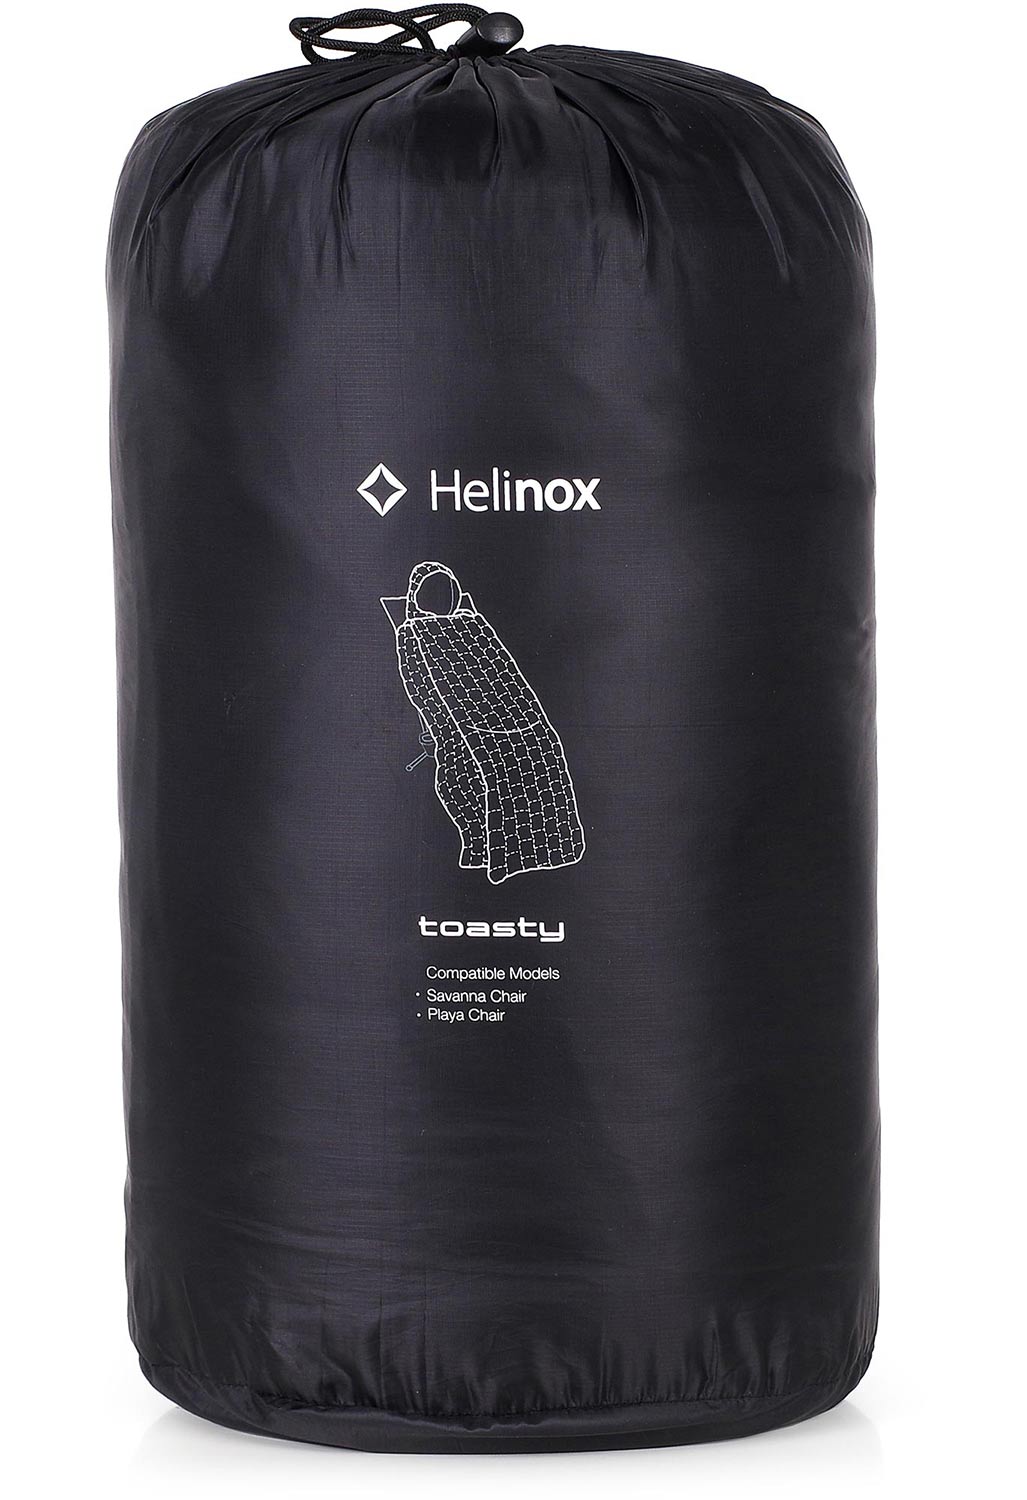 Helinox Toasty for Savanna Chair - Black